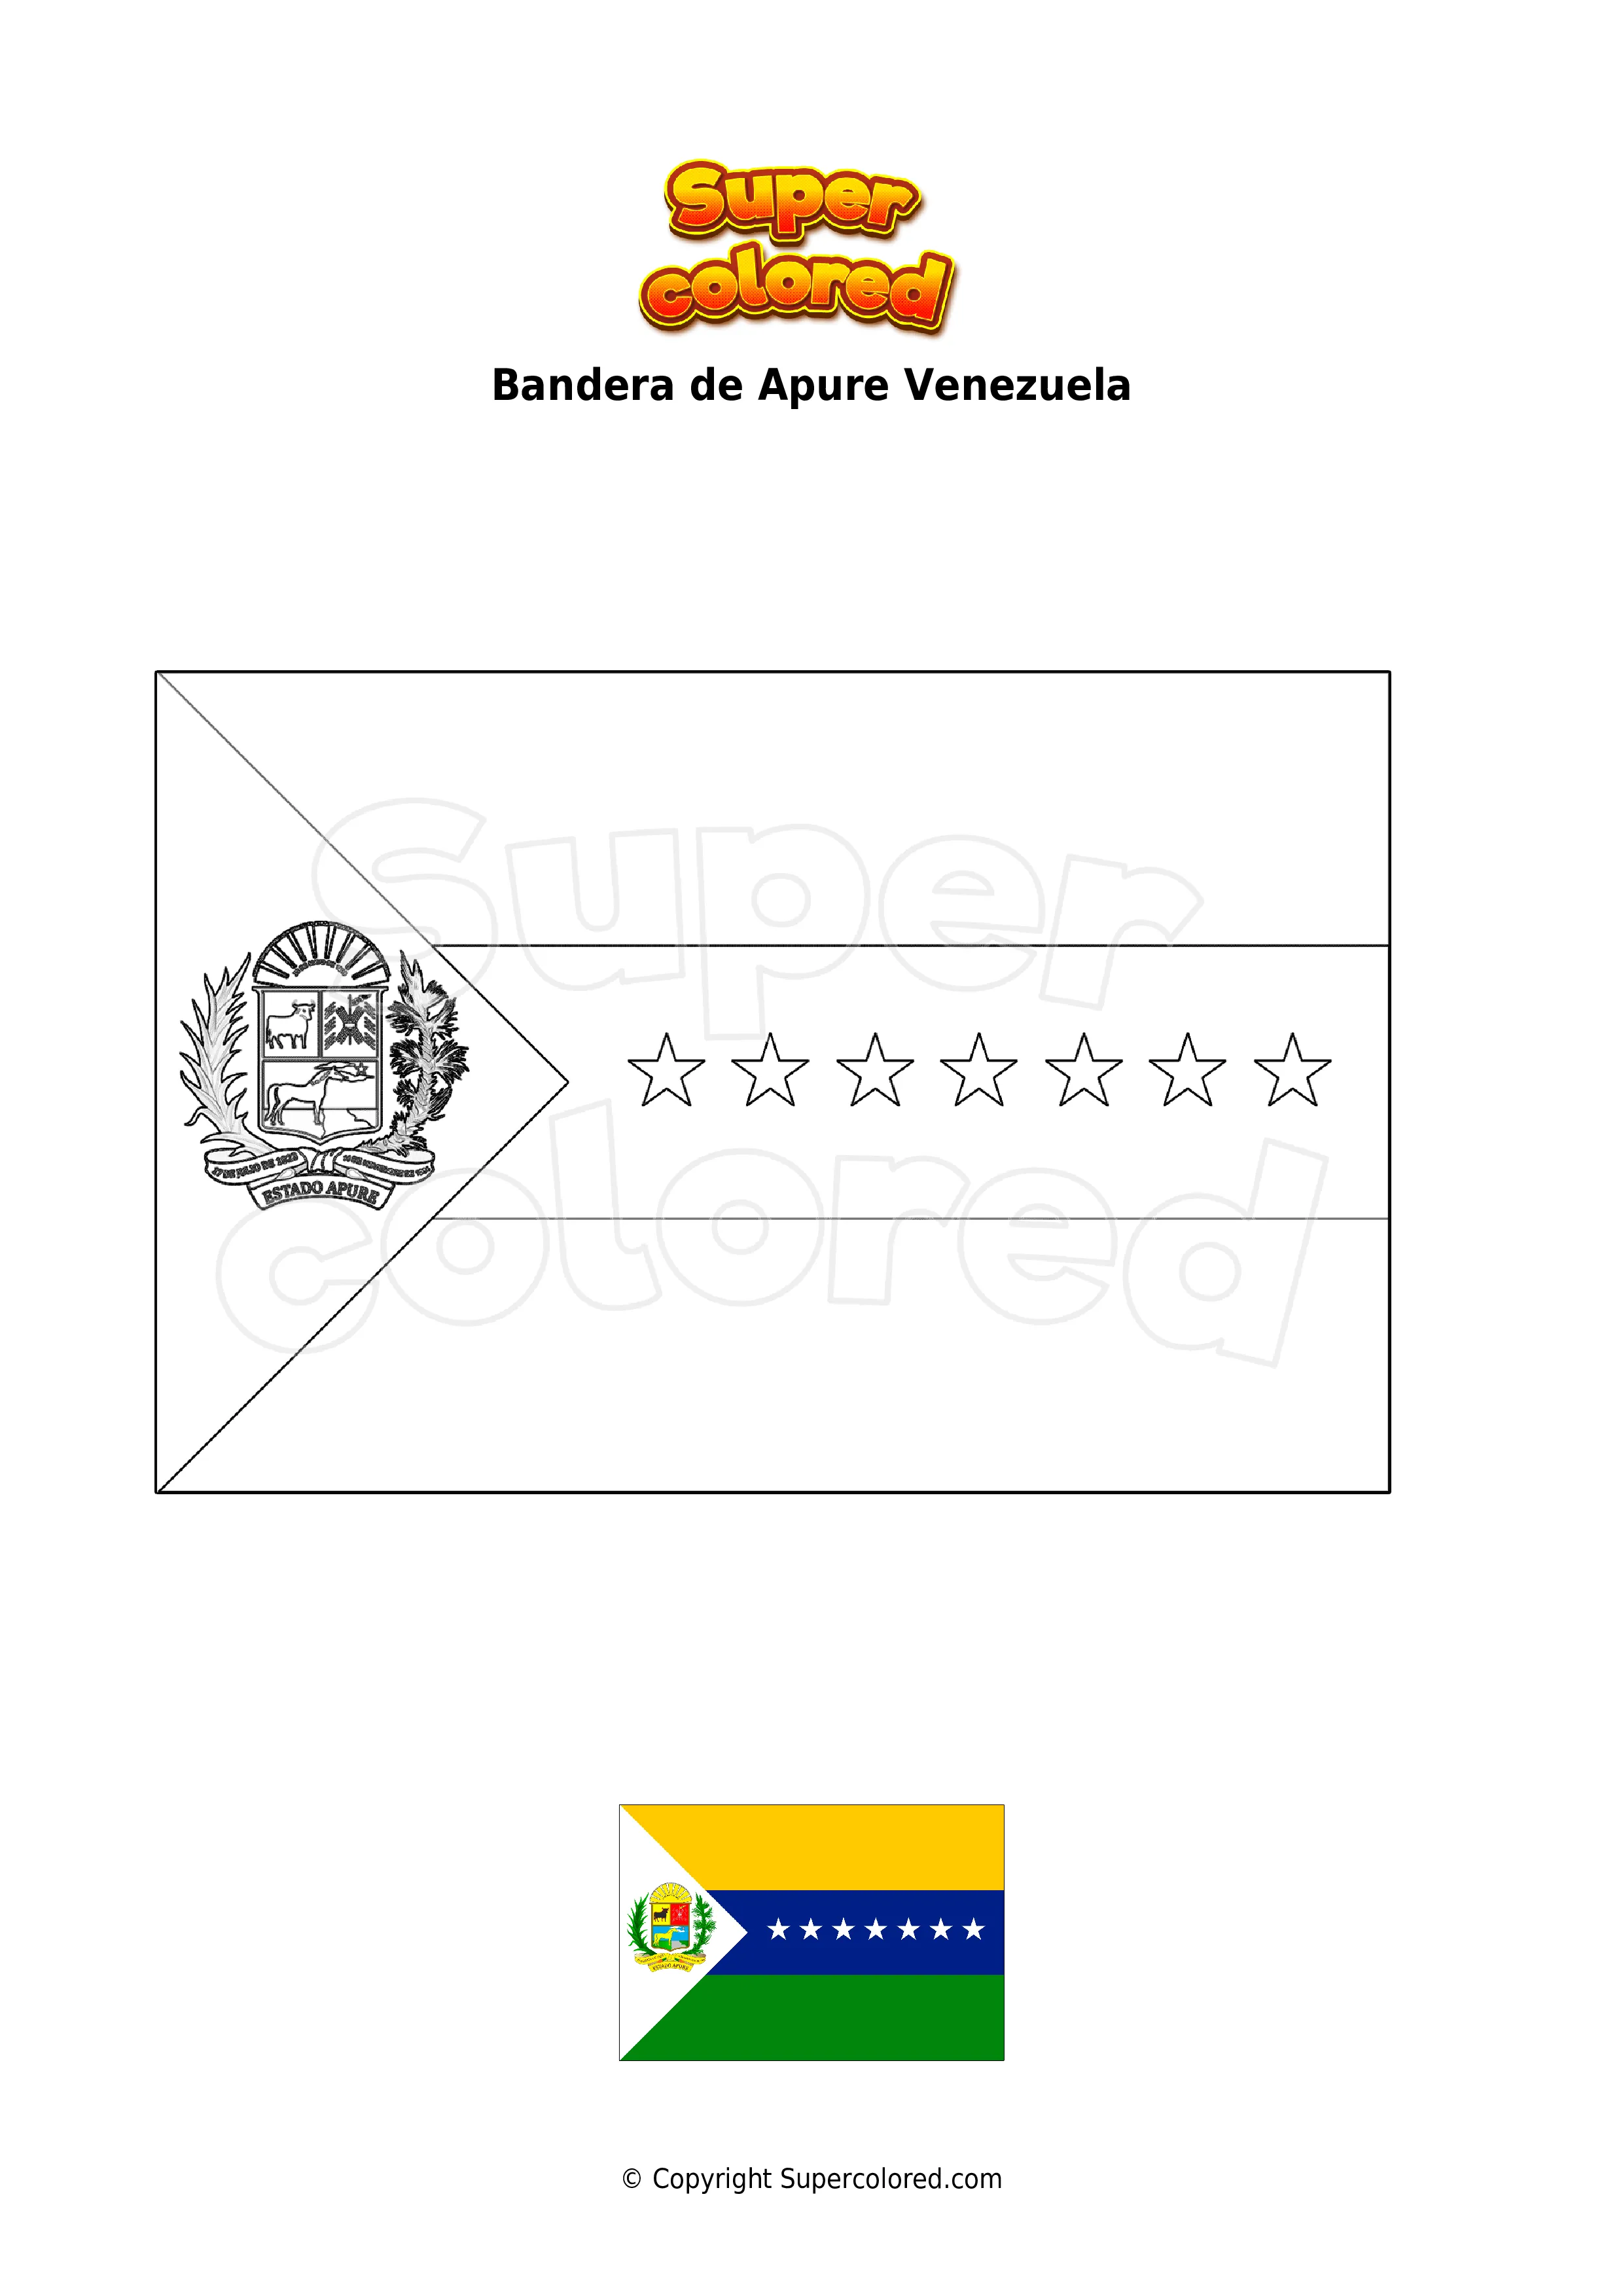 Dibujo para colorear Bandera de Apure Venezuela - Supercolored.com